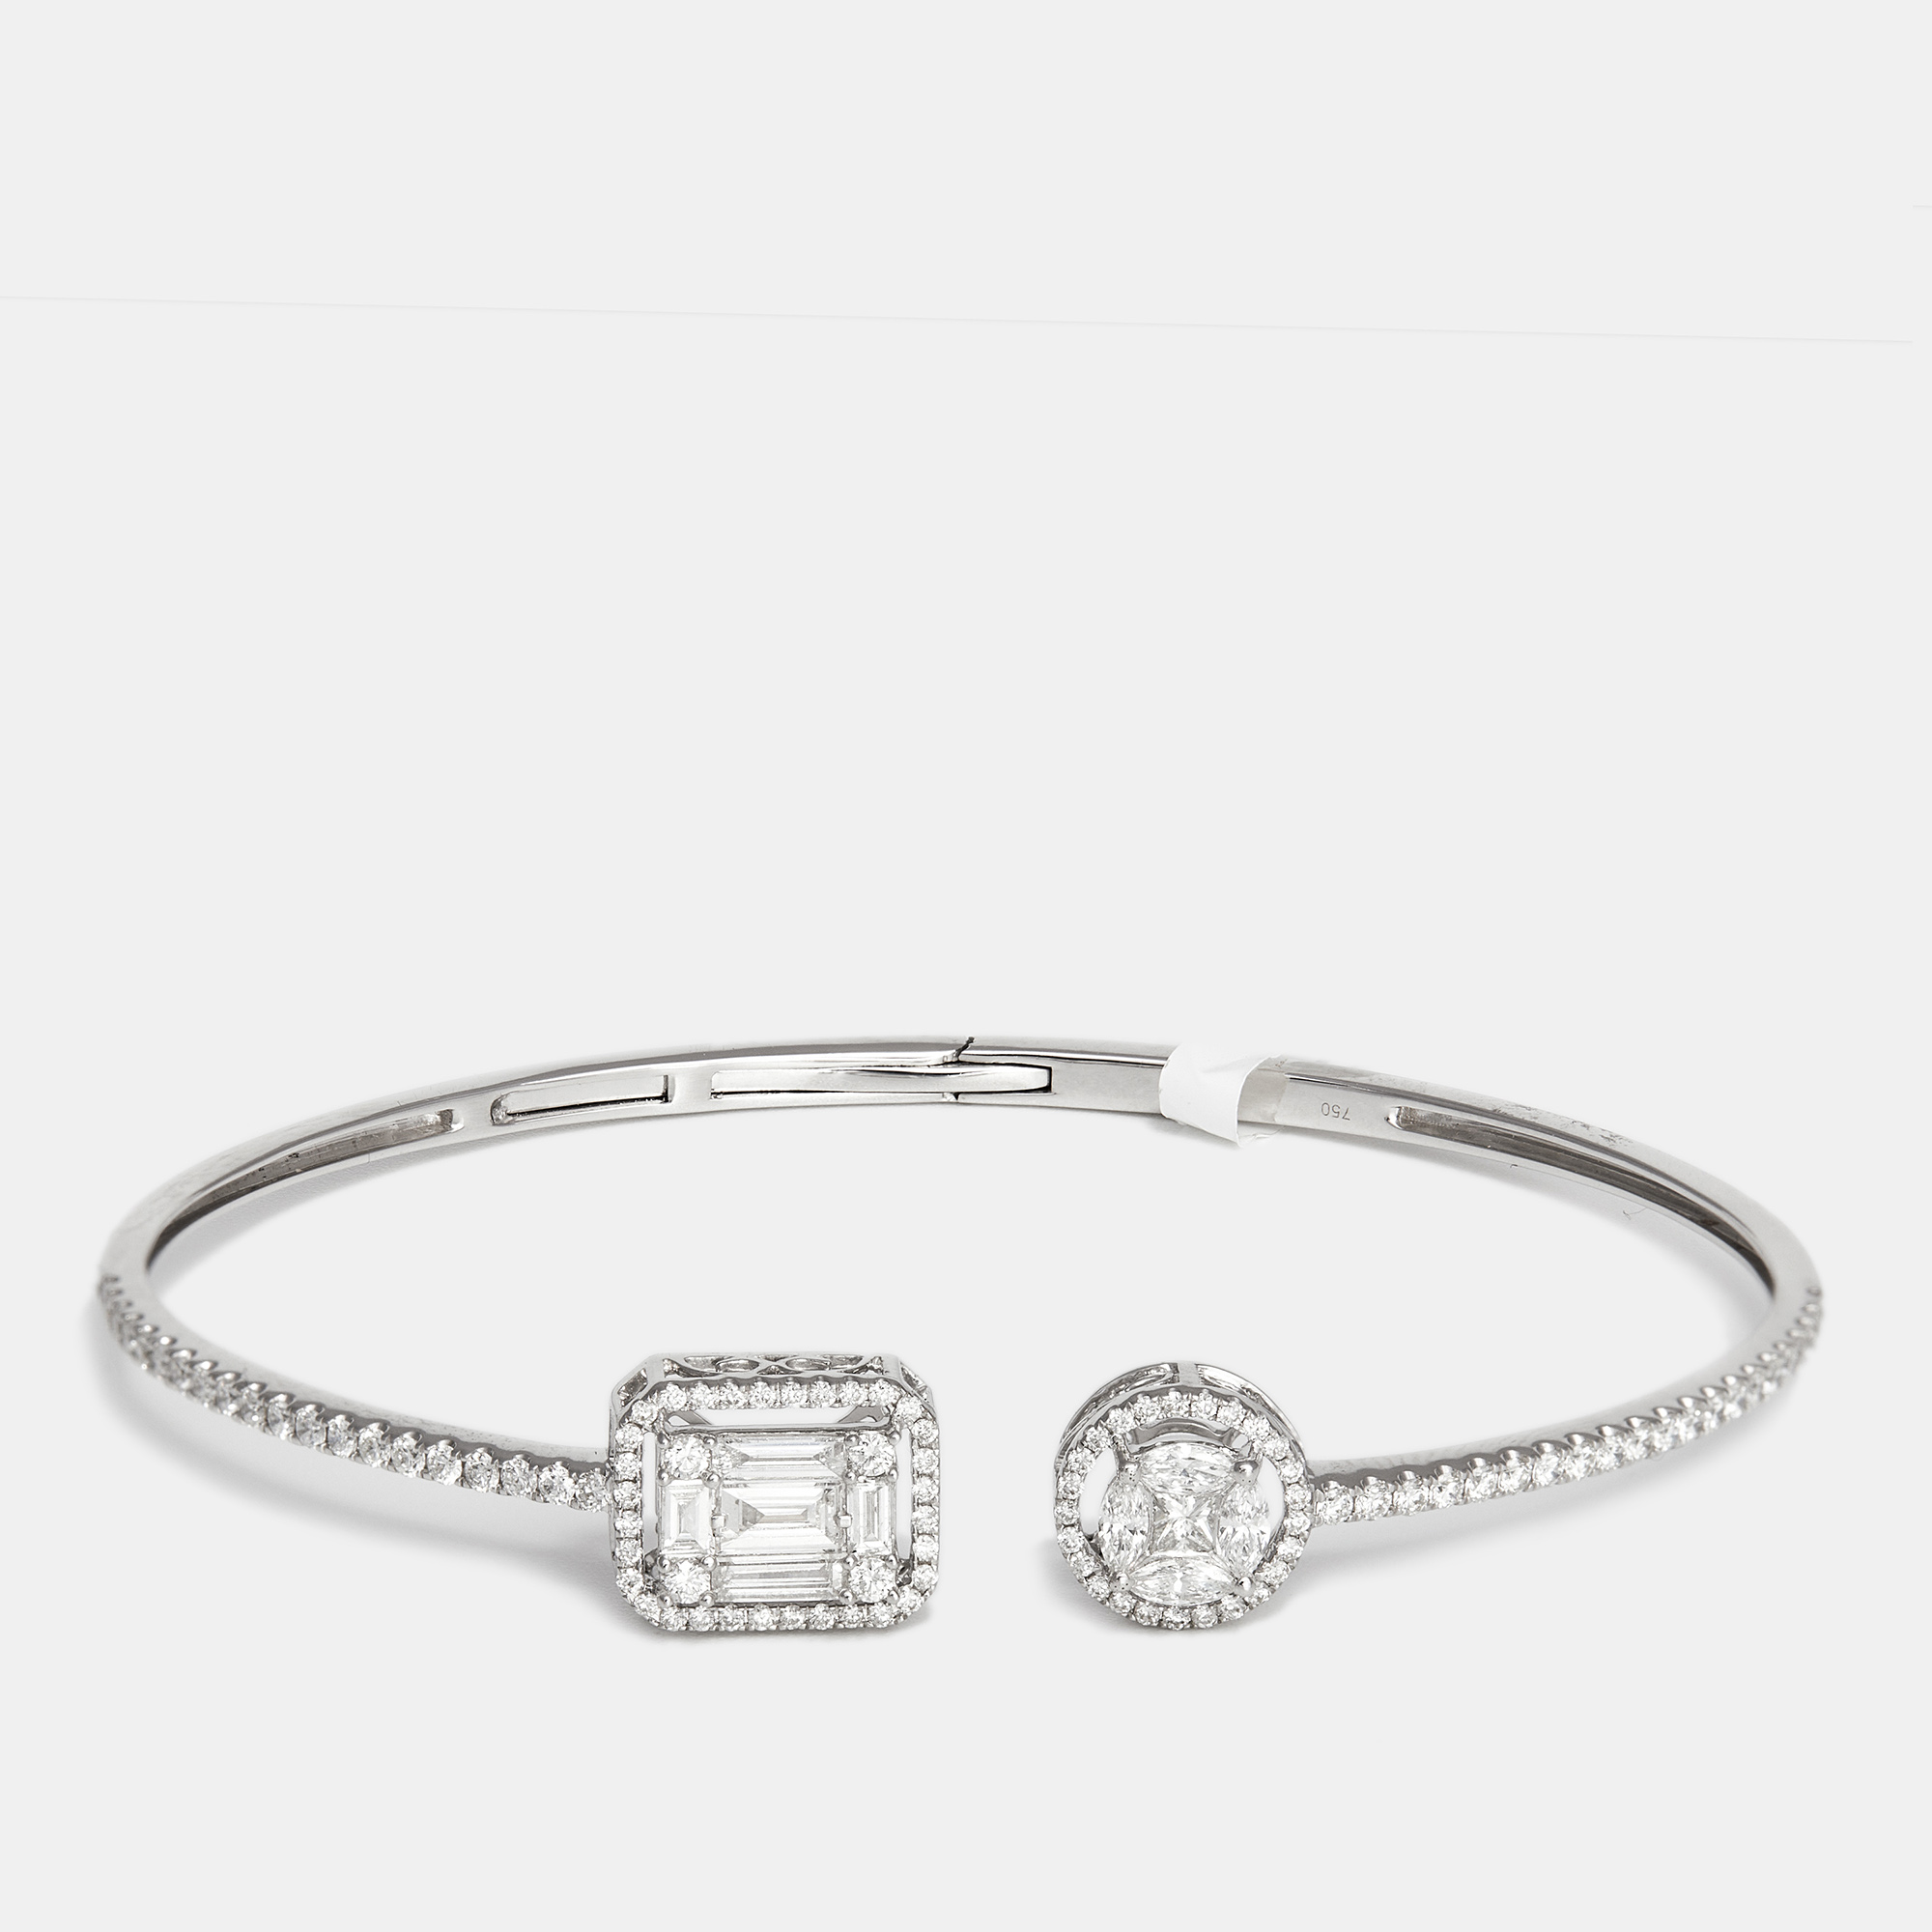 The diamond edit 18k white gold  bangle bracelet